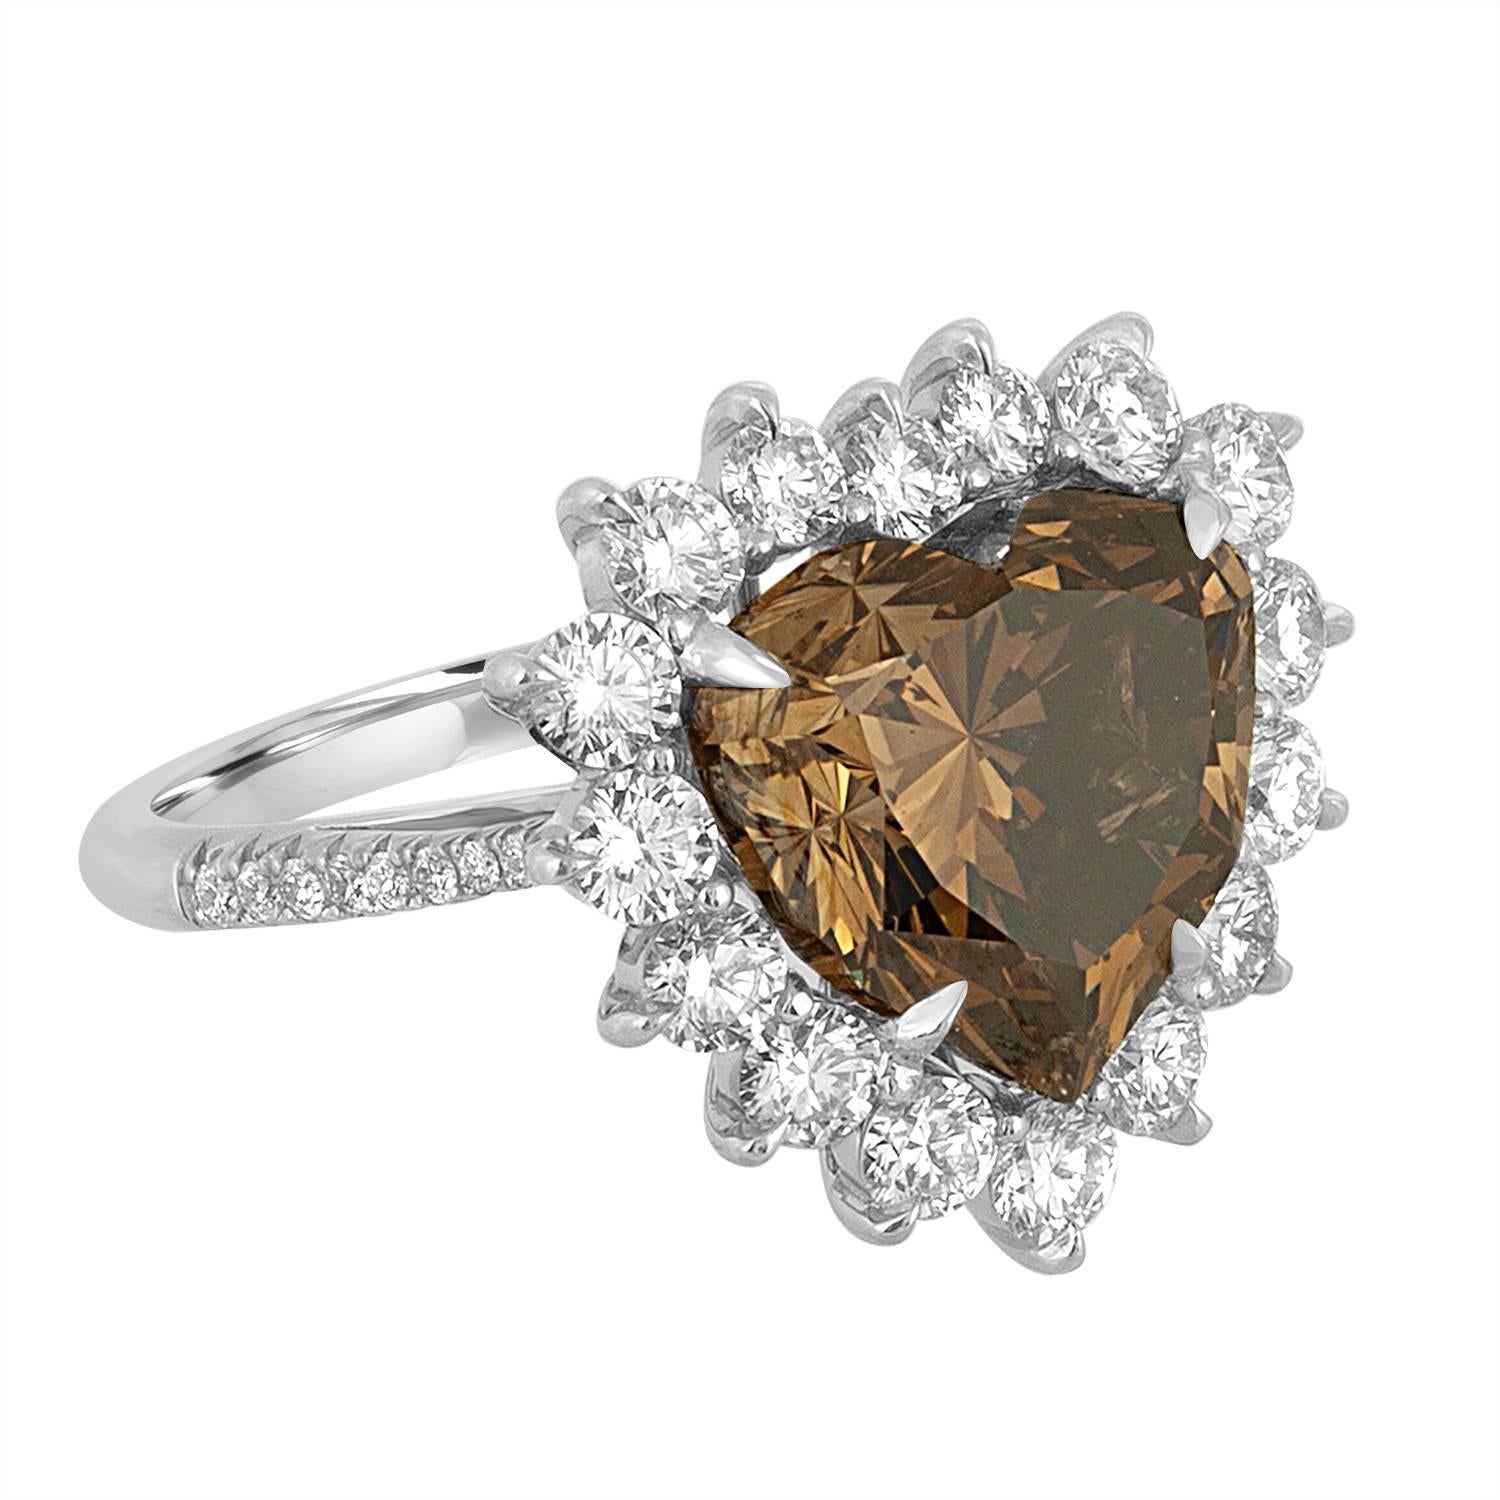 7.01 Carat GIA Certified Heart Shaped Diamond Platinum Ring